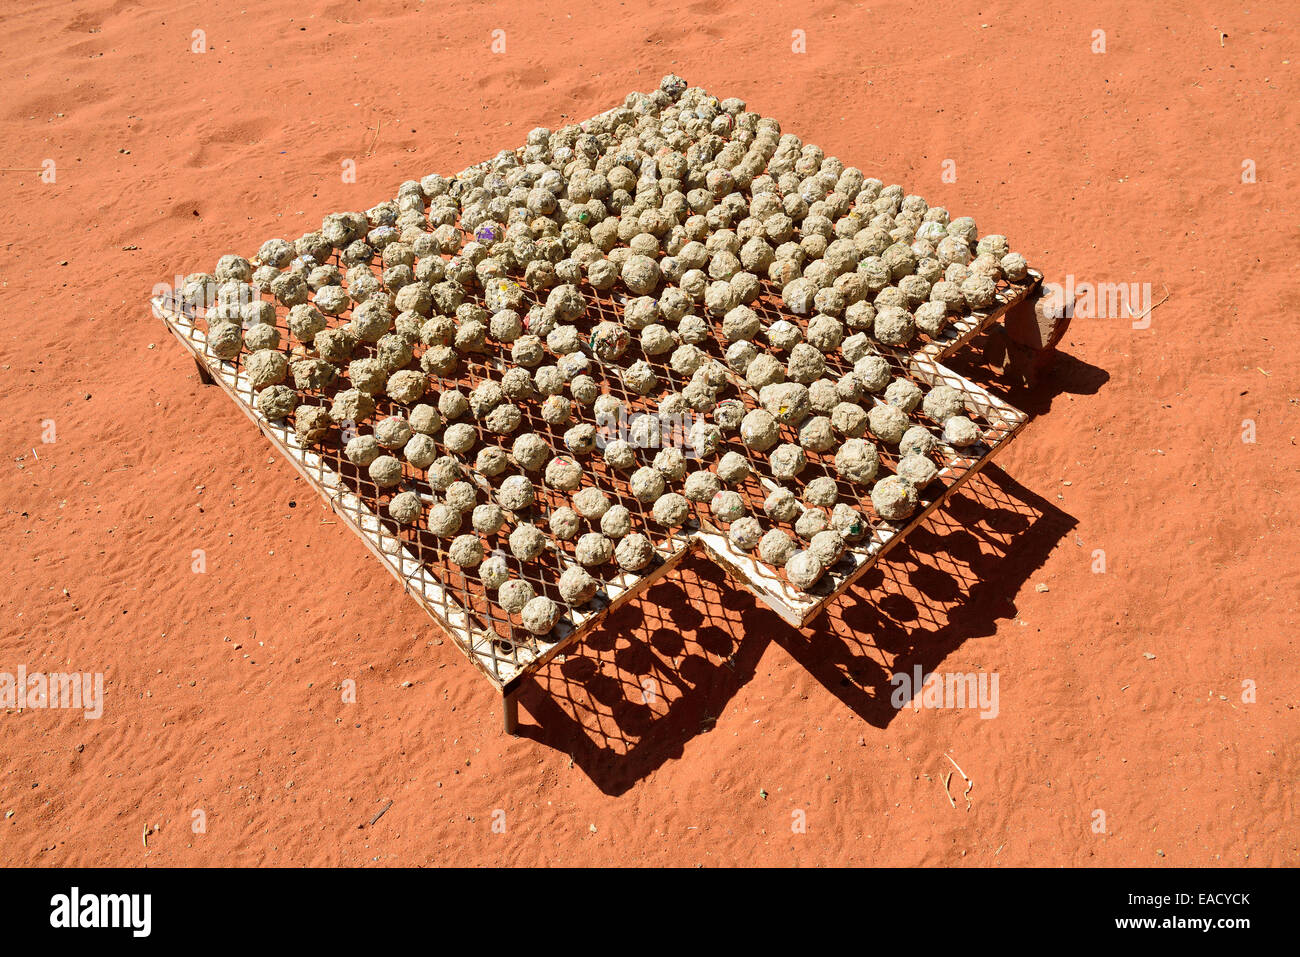 Erneuerbare Energien, Kugeln aus Recycling-Papier, papier Papiermache, Pappmaché, trocknen in der Sonne, Namibia Stockfoto